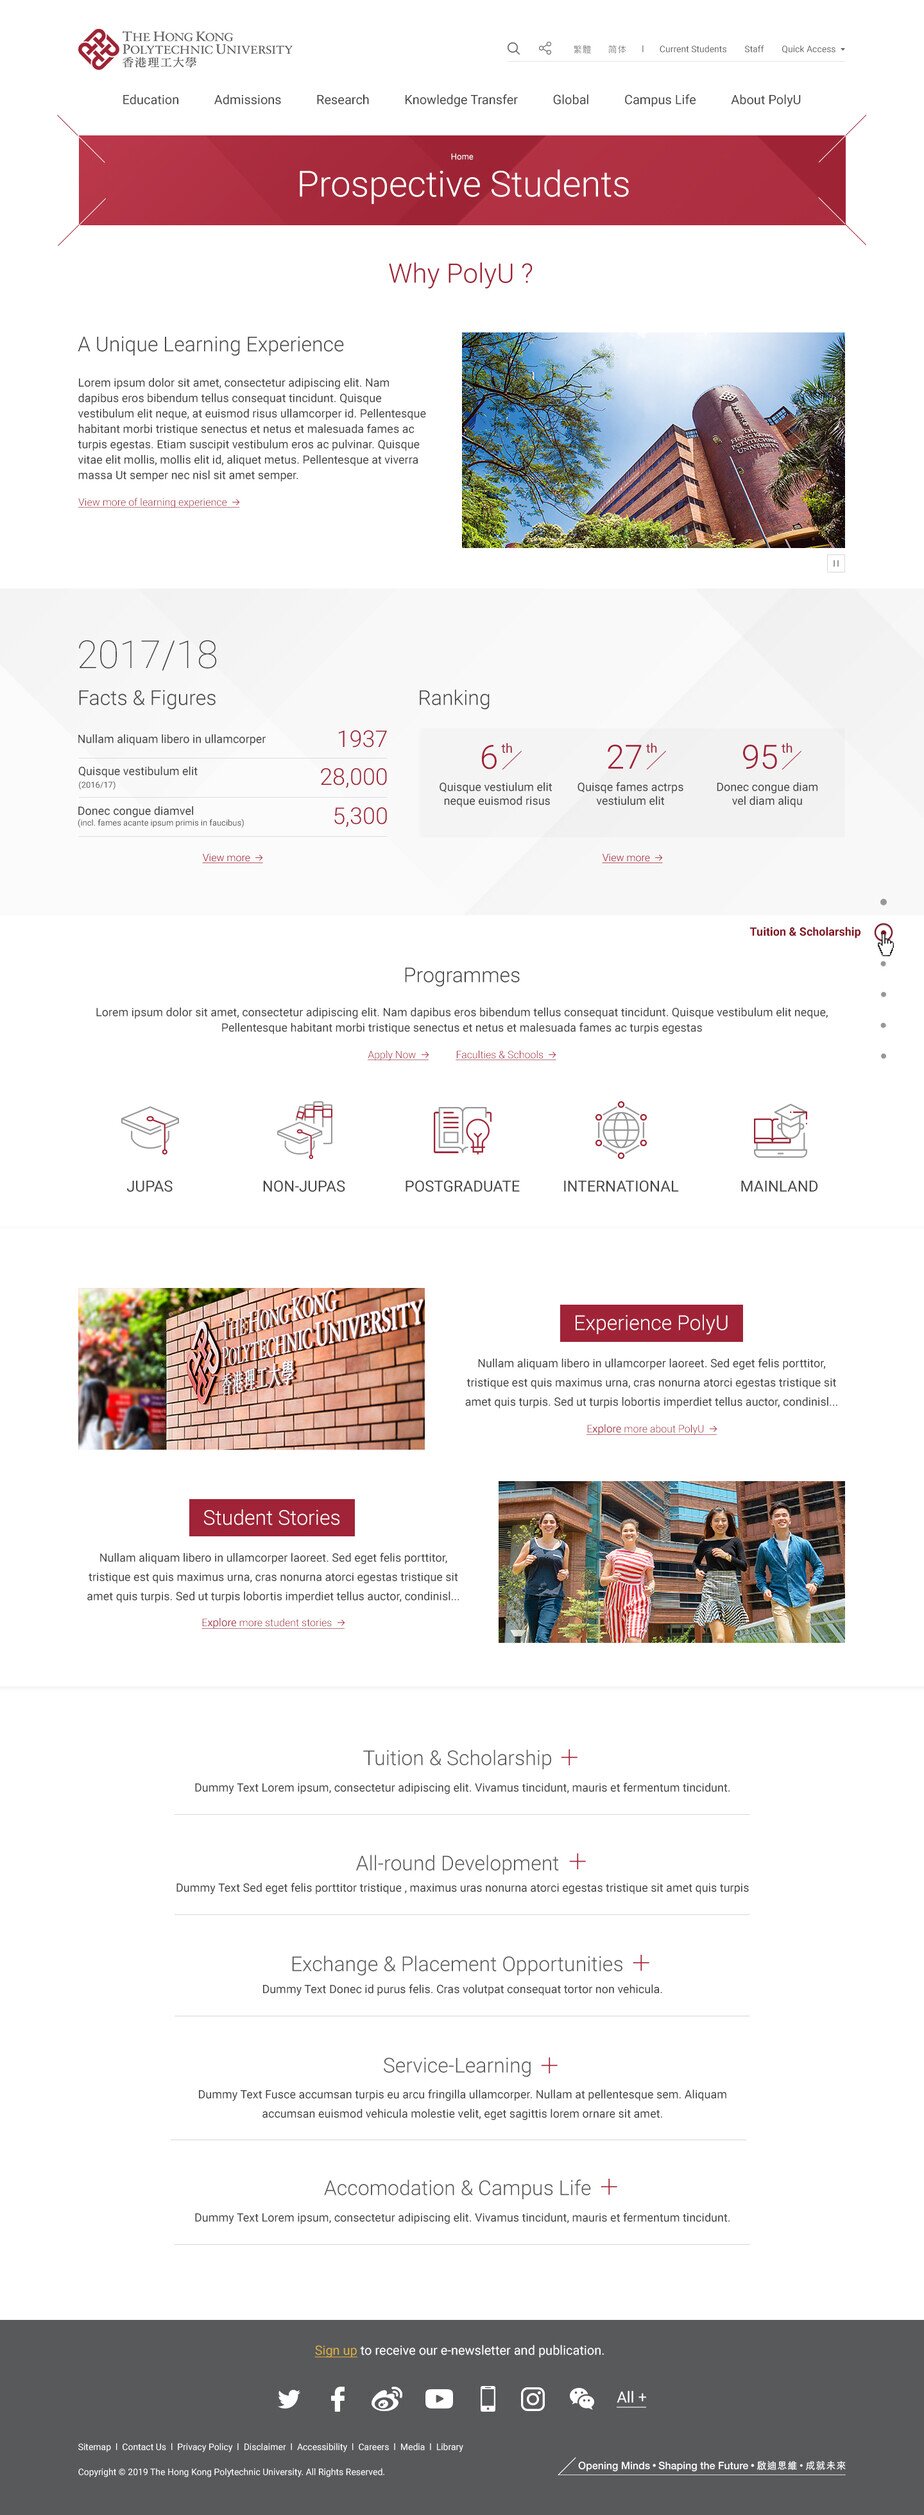 Hong Kong Polytechnic University website screenshot for desktop version 2 of 5